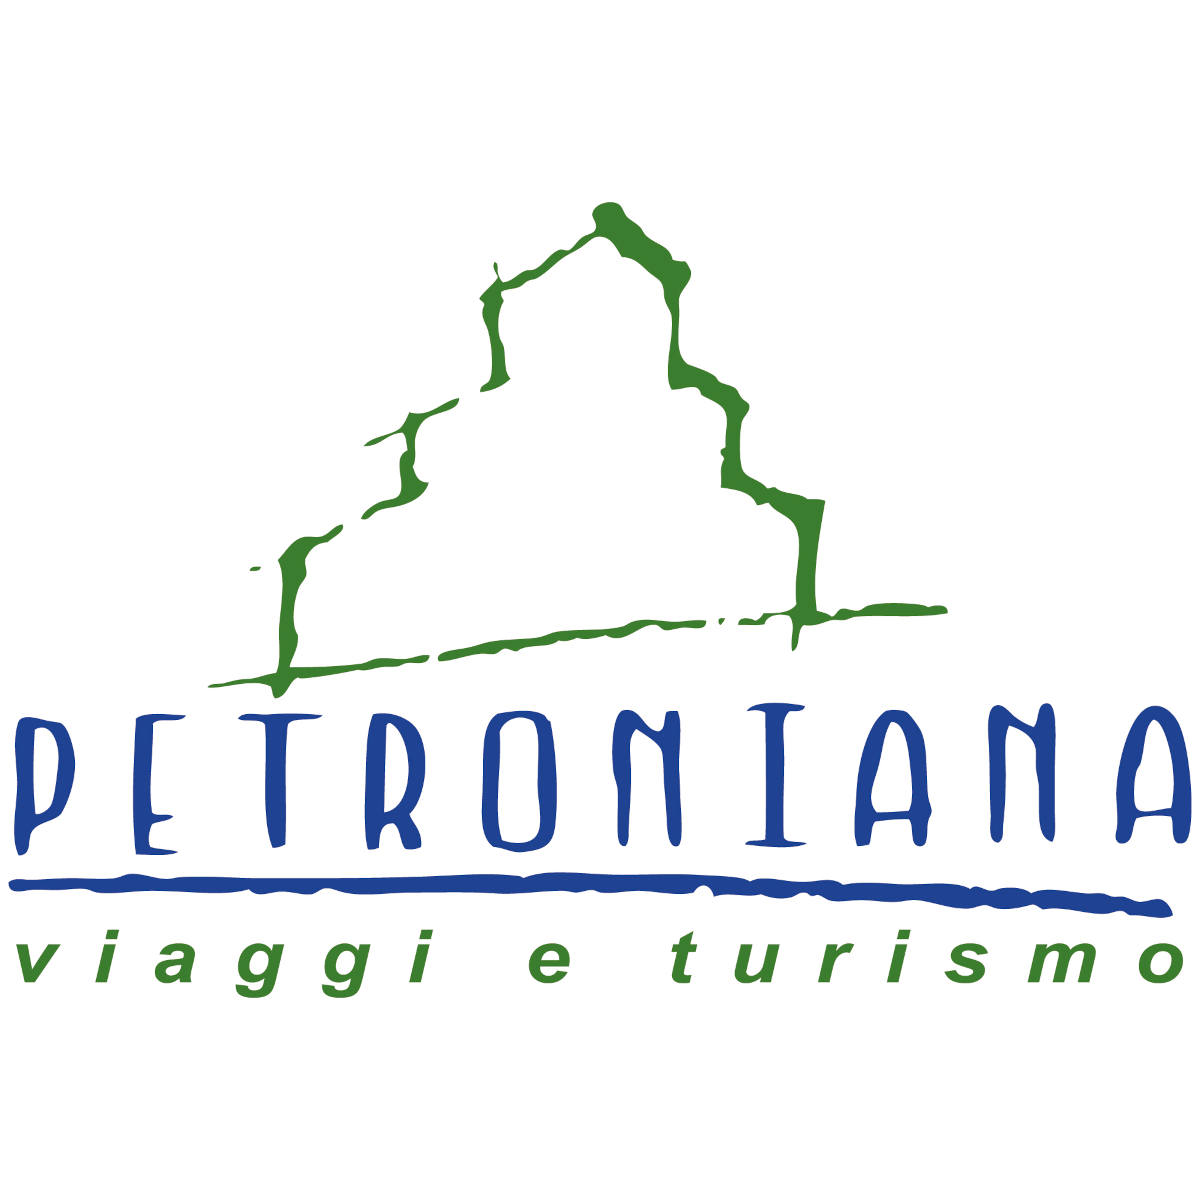 Petroniana Travels